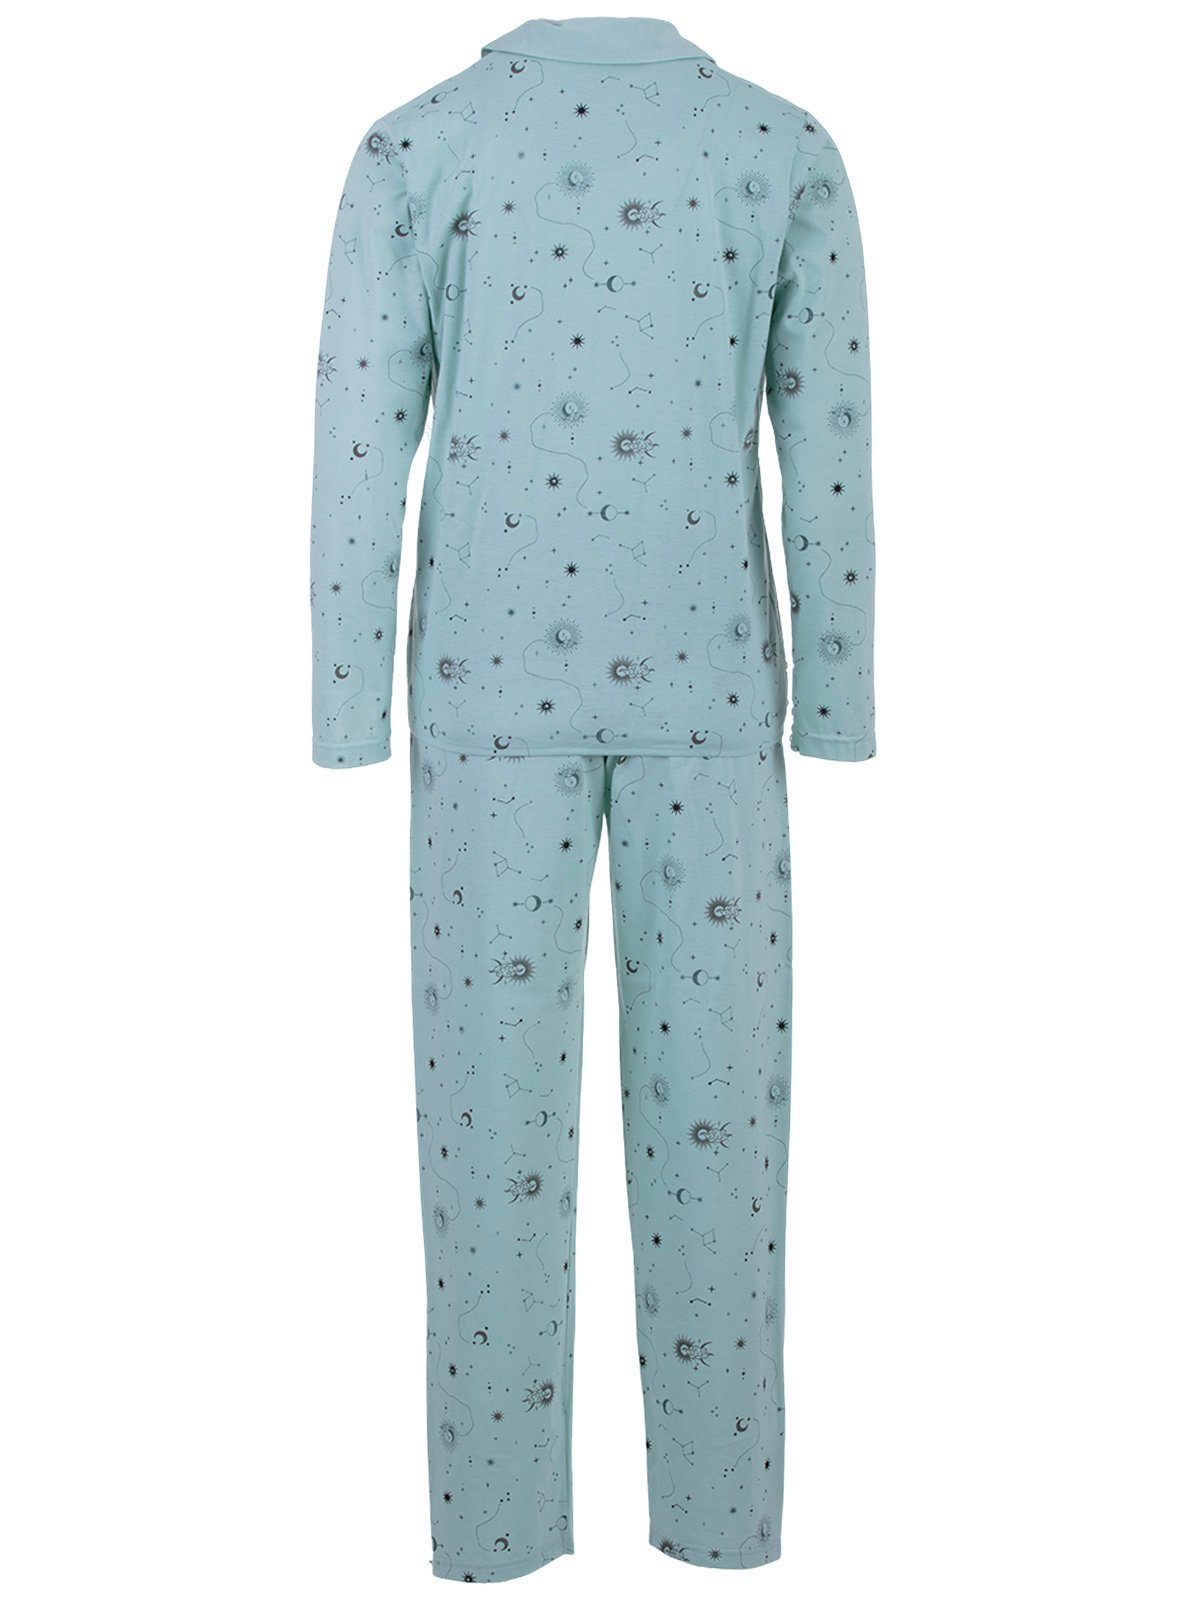 Langarm Pyjama Mond Set Sterne - zeitlos Schlafanzug bordeaux